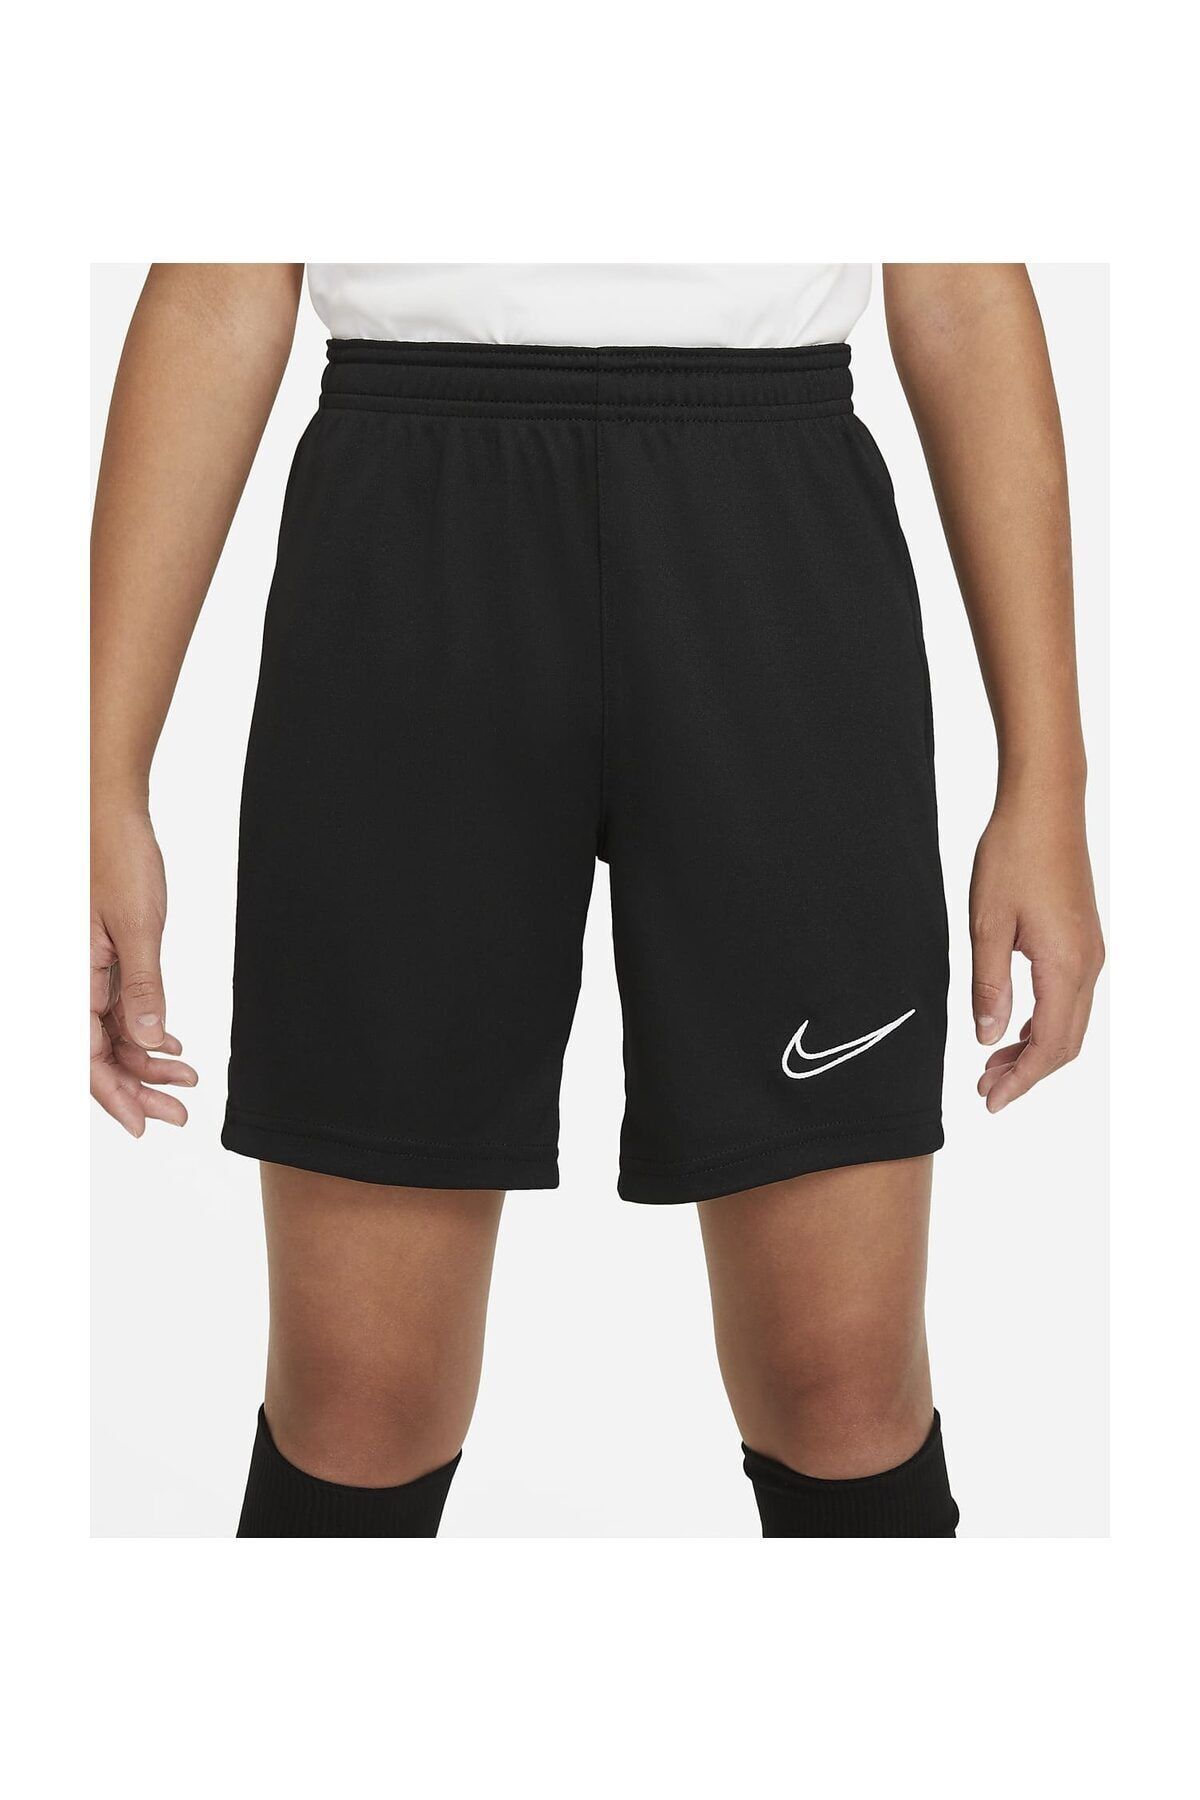 Nike Unisex Spor Şort - Academy 21 Short - CW6109-010